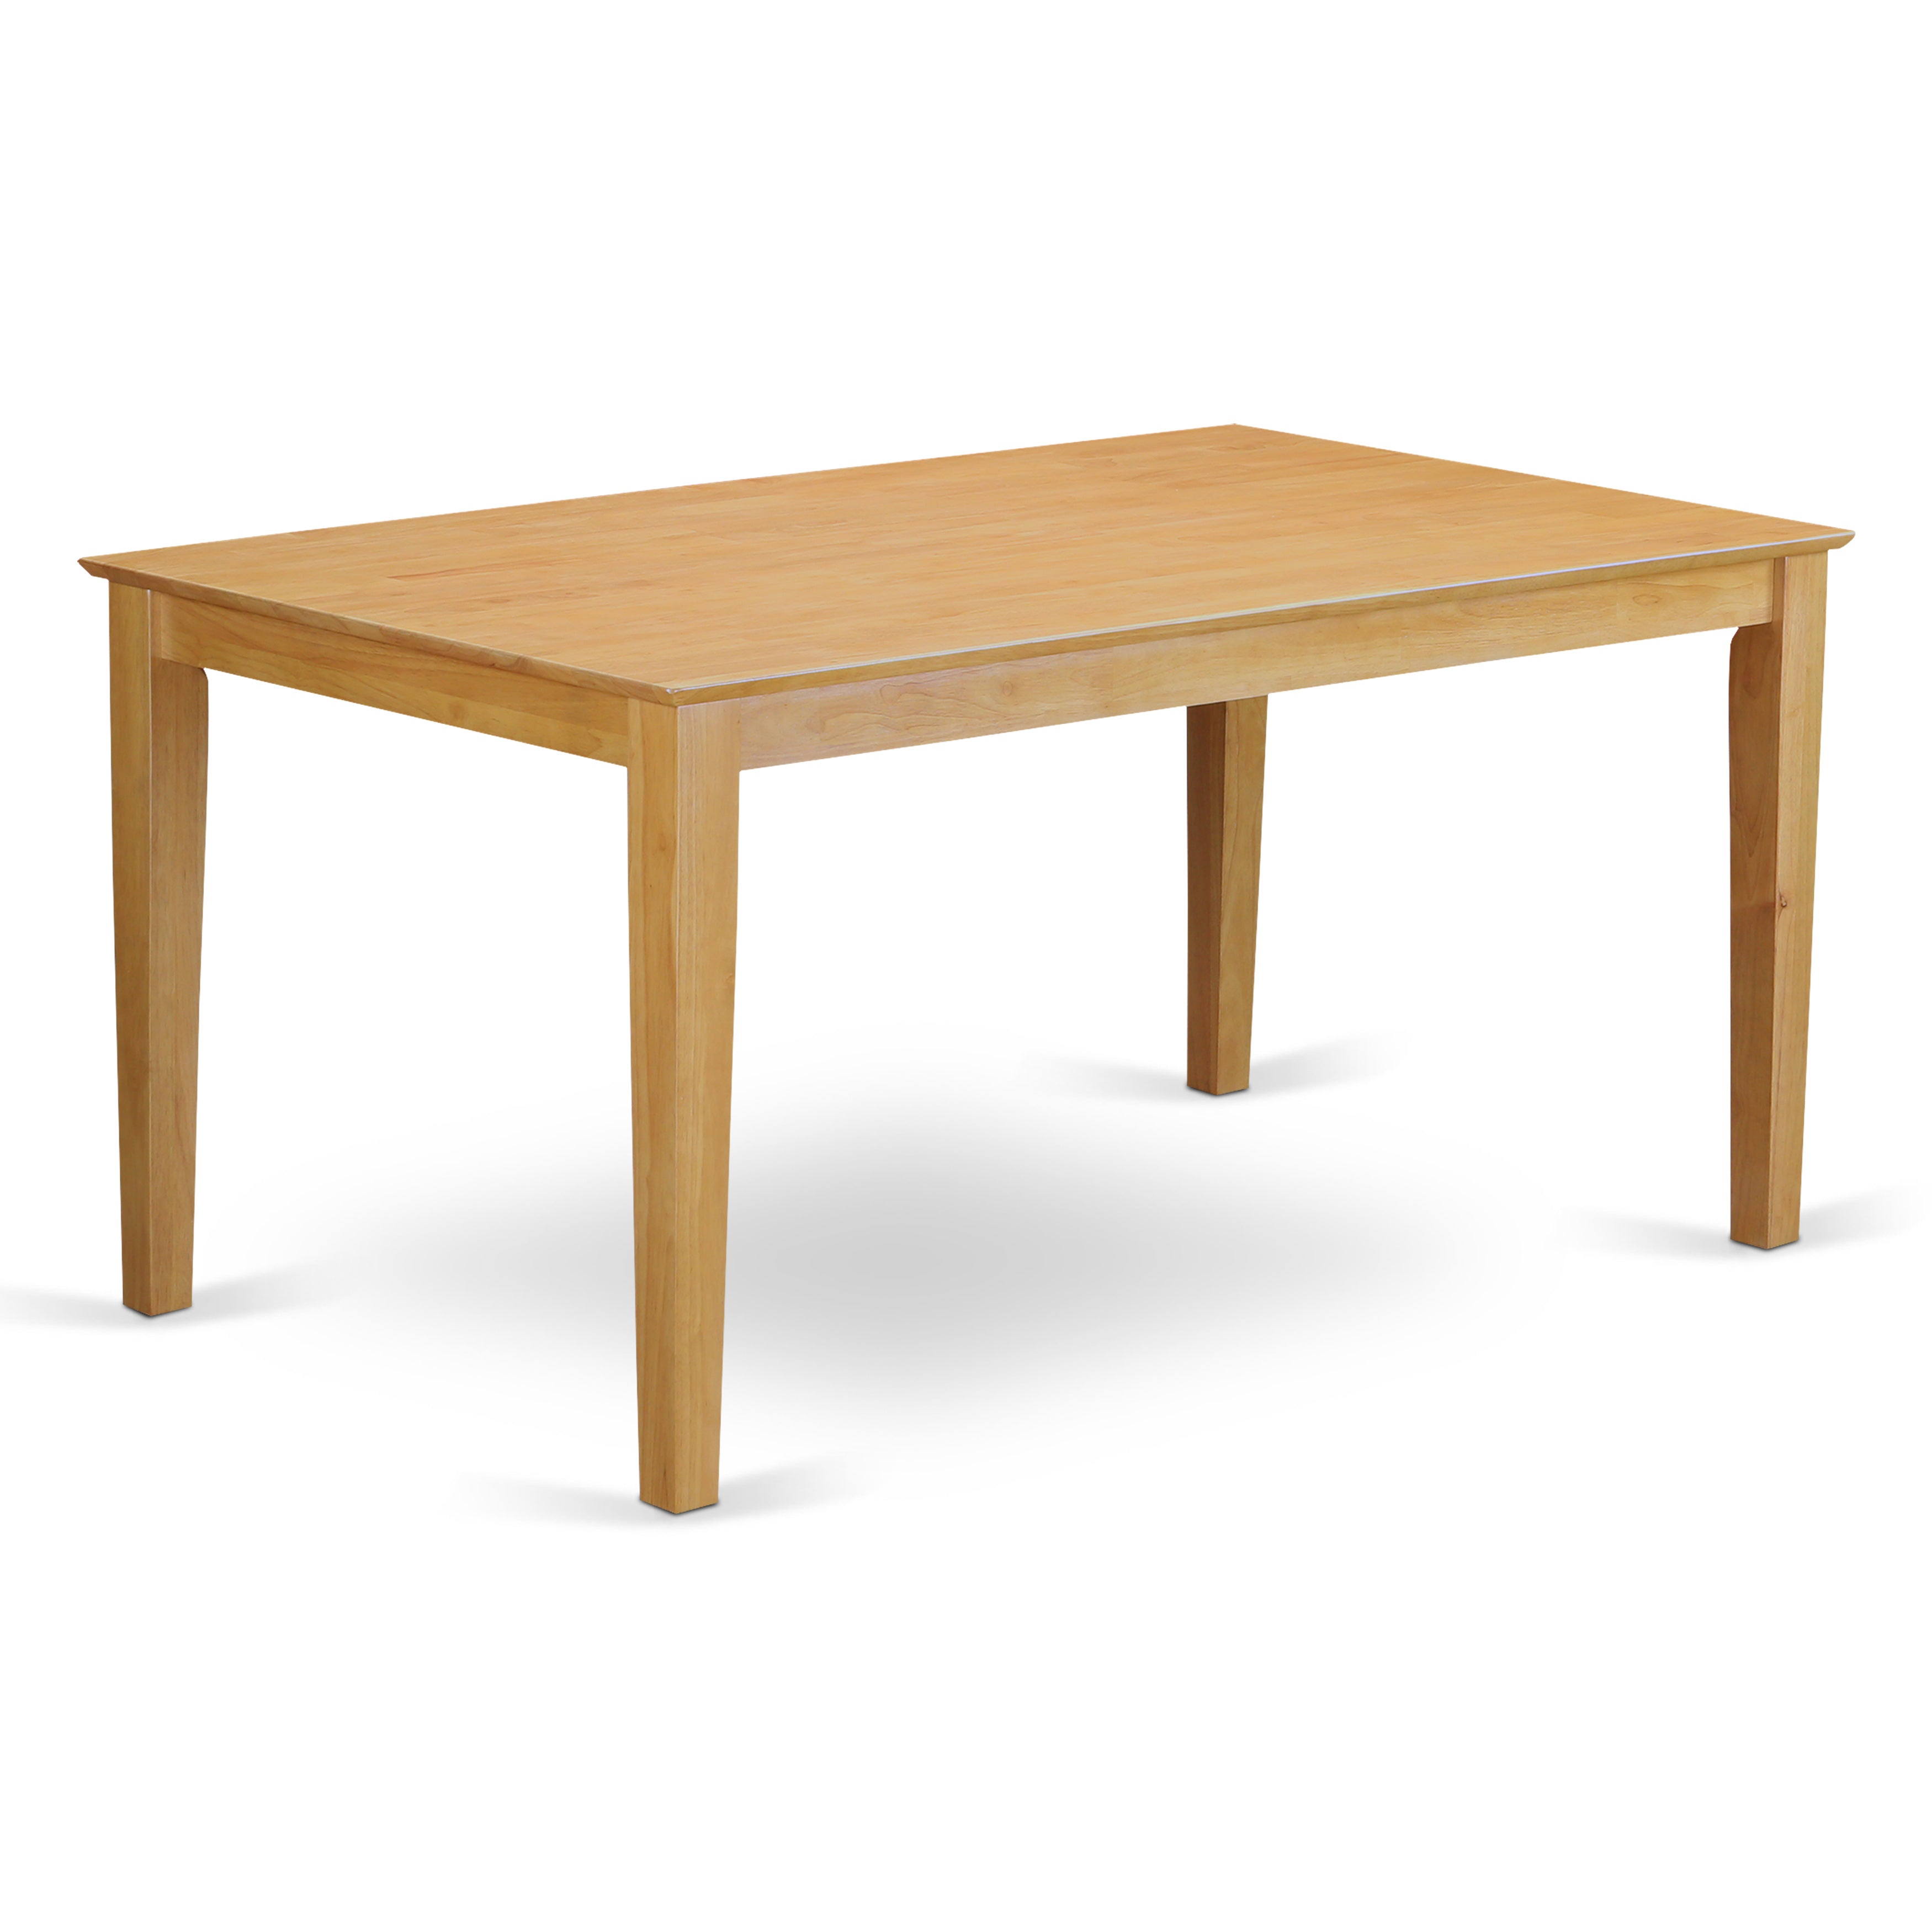 CAT-OAK-S CAT-OAK-S Capri Rectangular dining table 36"x60" with solid wood top In Cappuccino Finish